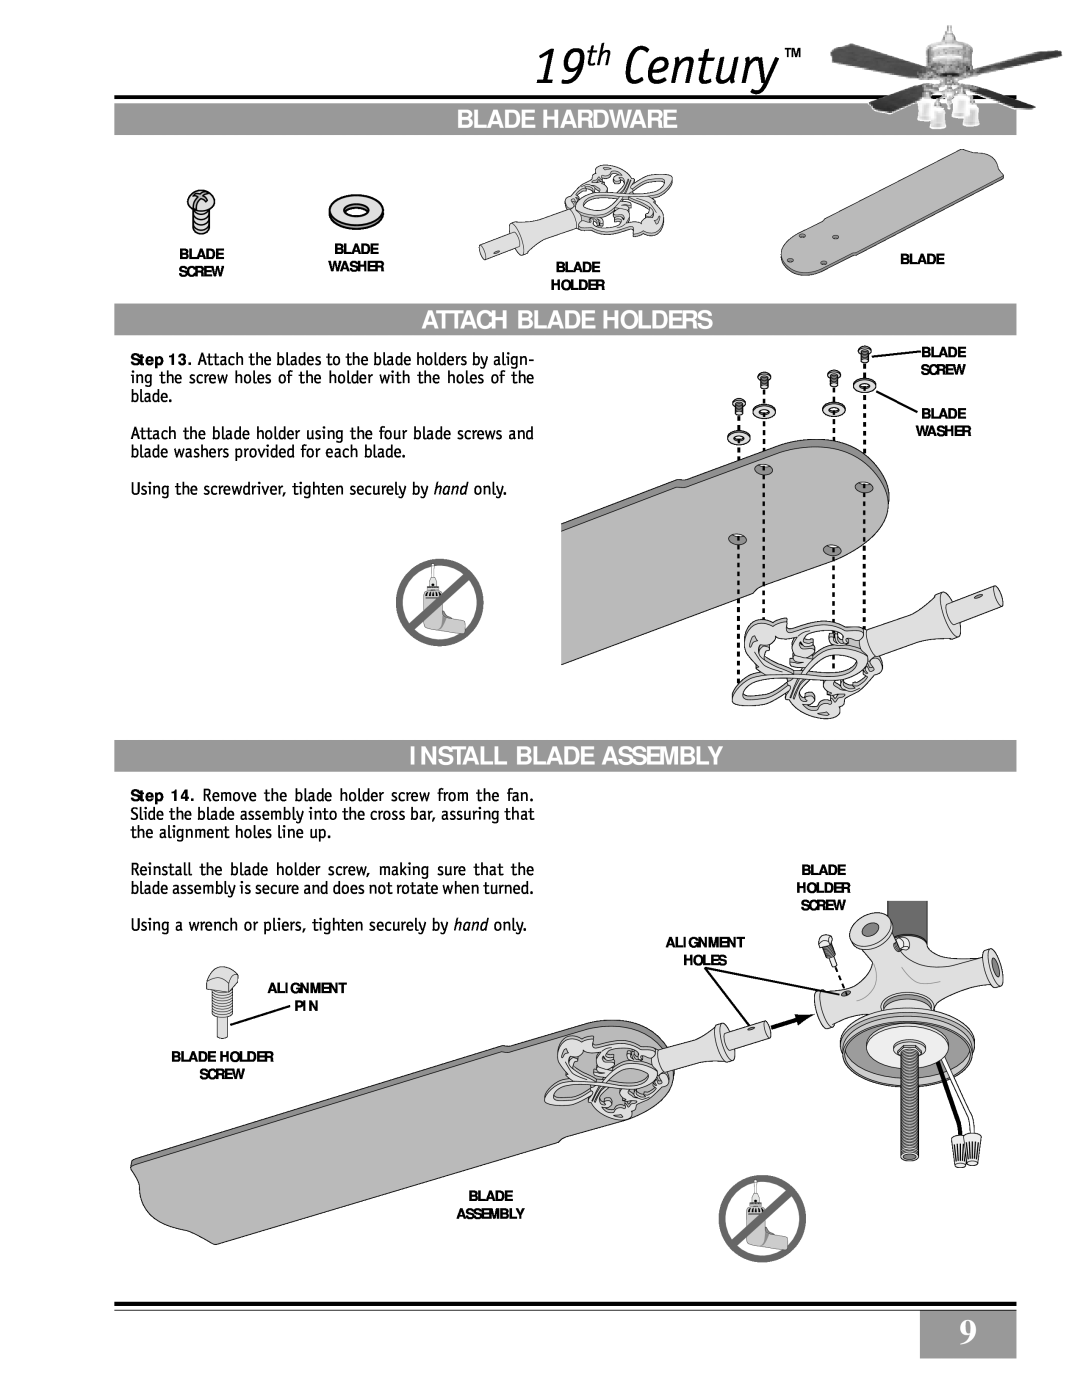 Casablanca Fan Company Casablanca 19th Century manual Blade Hardware, Attach Blade Holders, Install Blade Assembly, Screw 